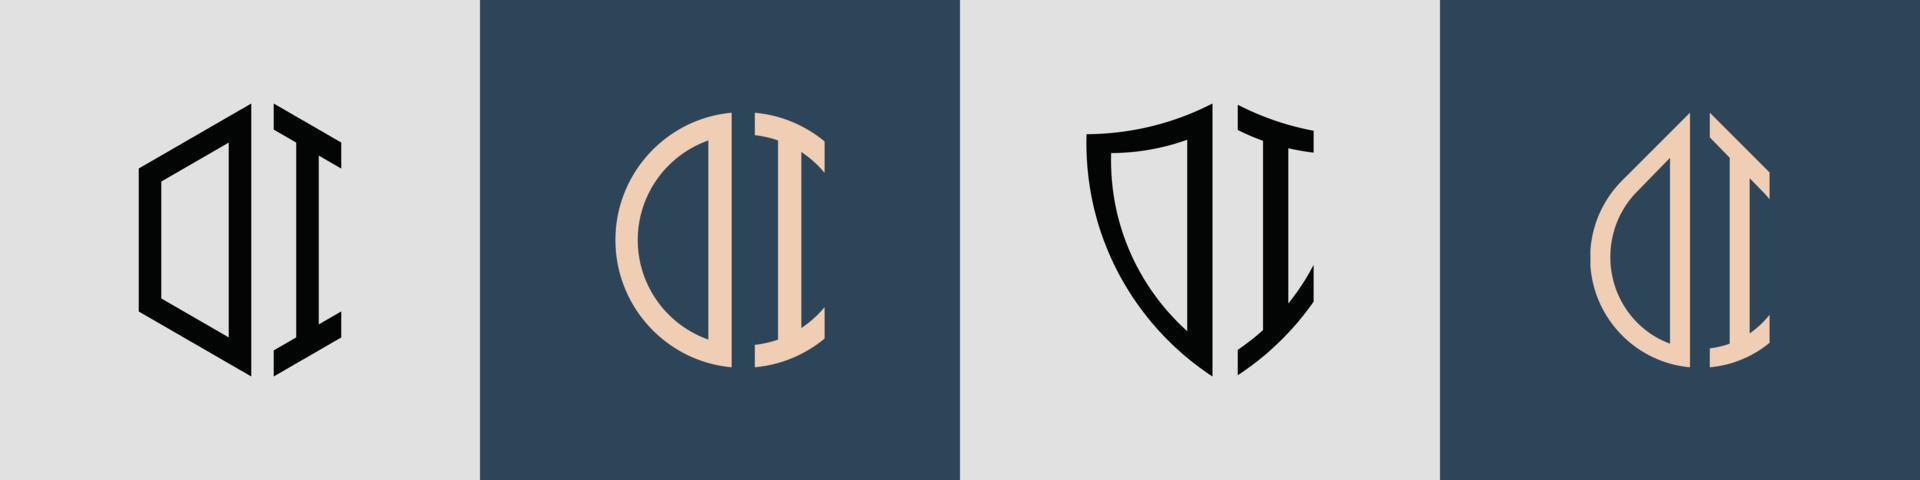 Creative simple Initial Letters DI Logo Designs Bundle. vector